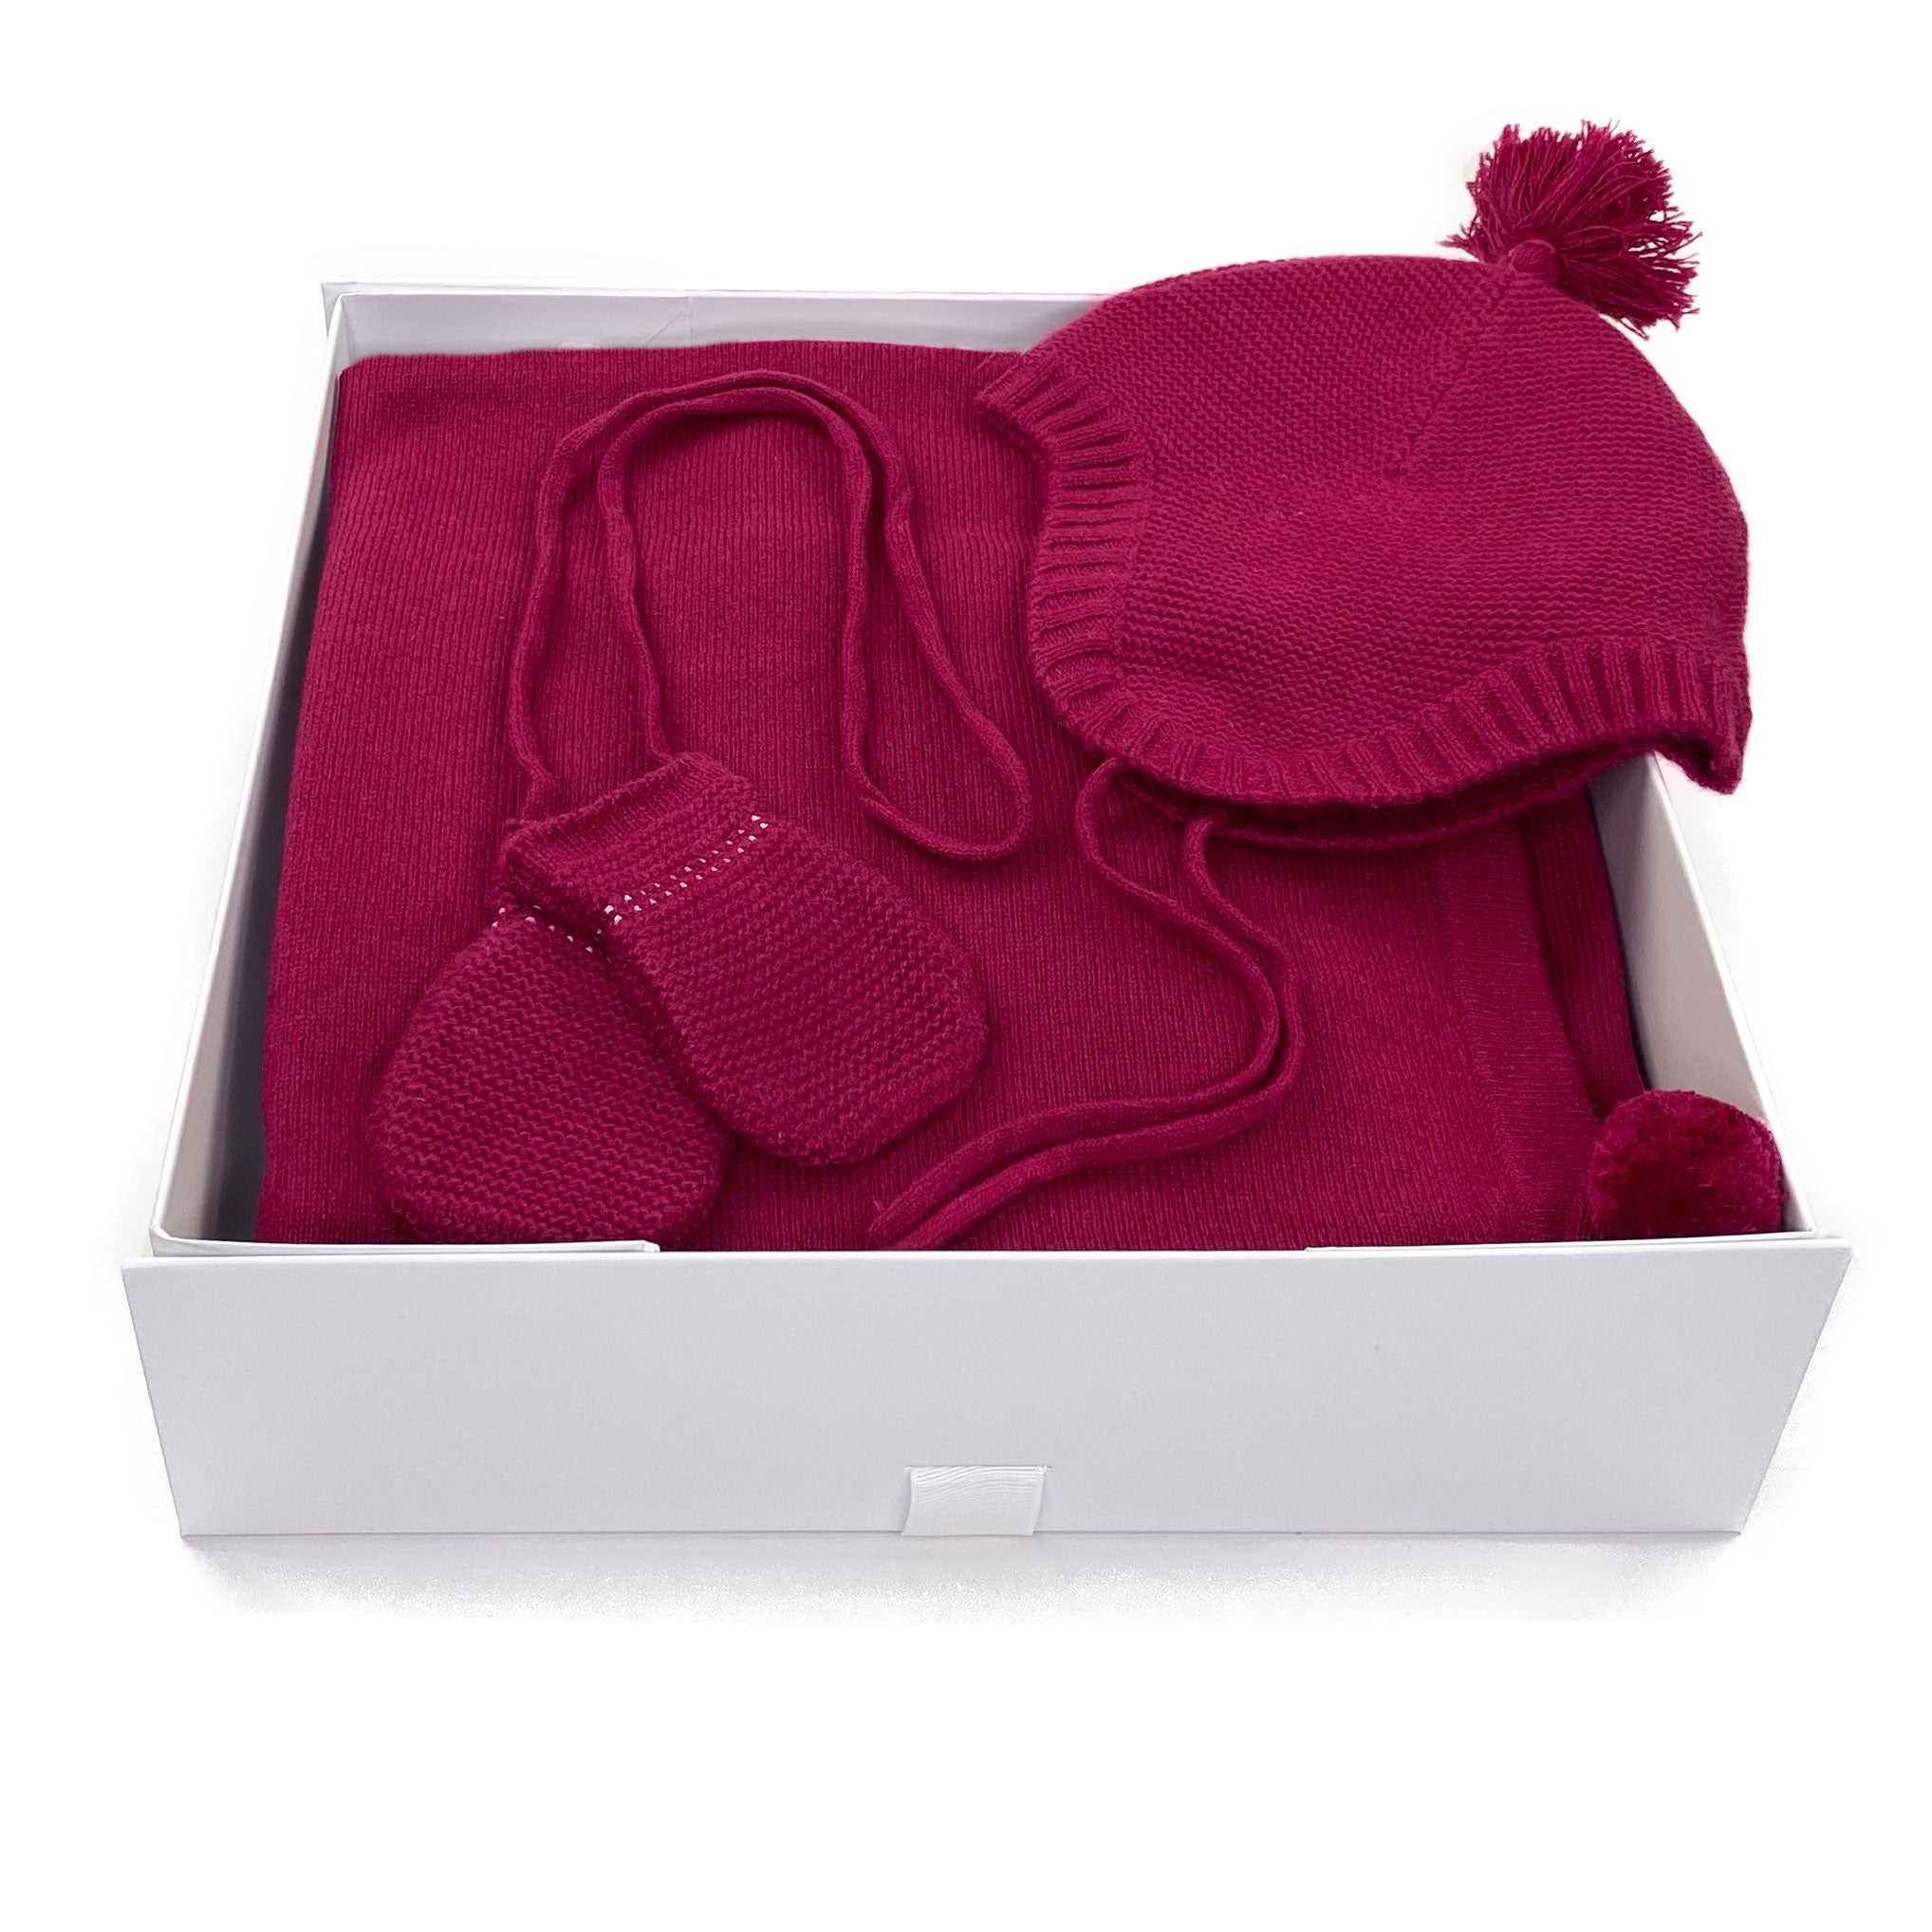 Luxury Cashmere Baby Gift in Magenta